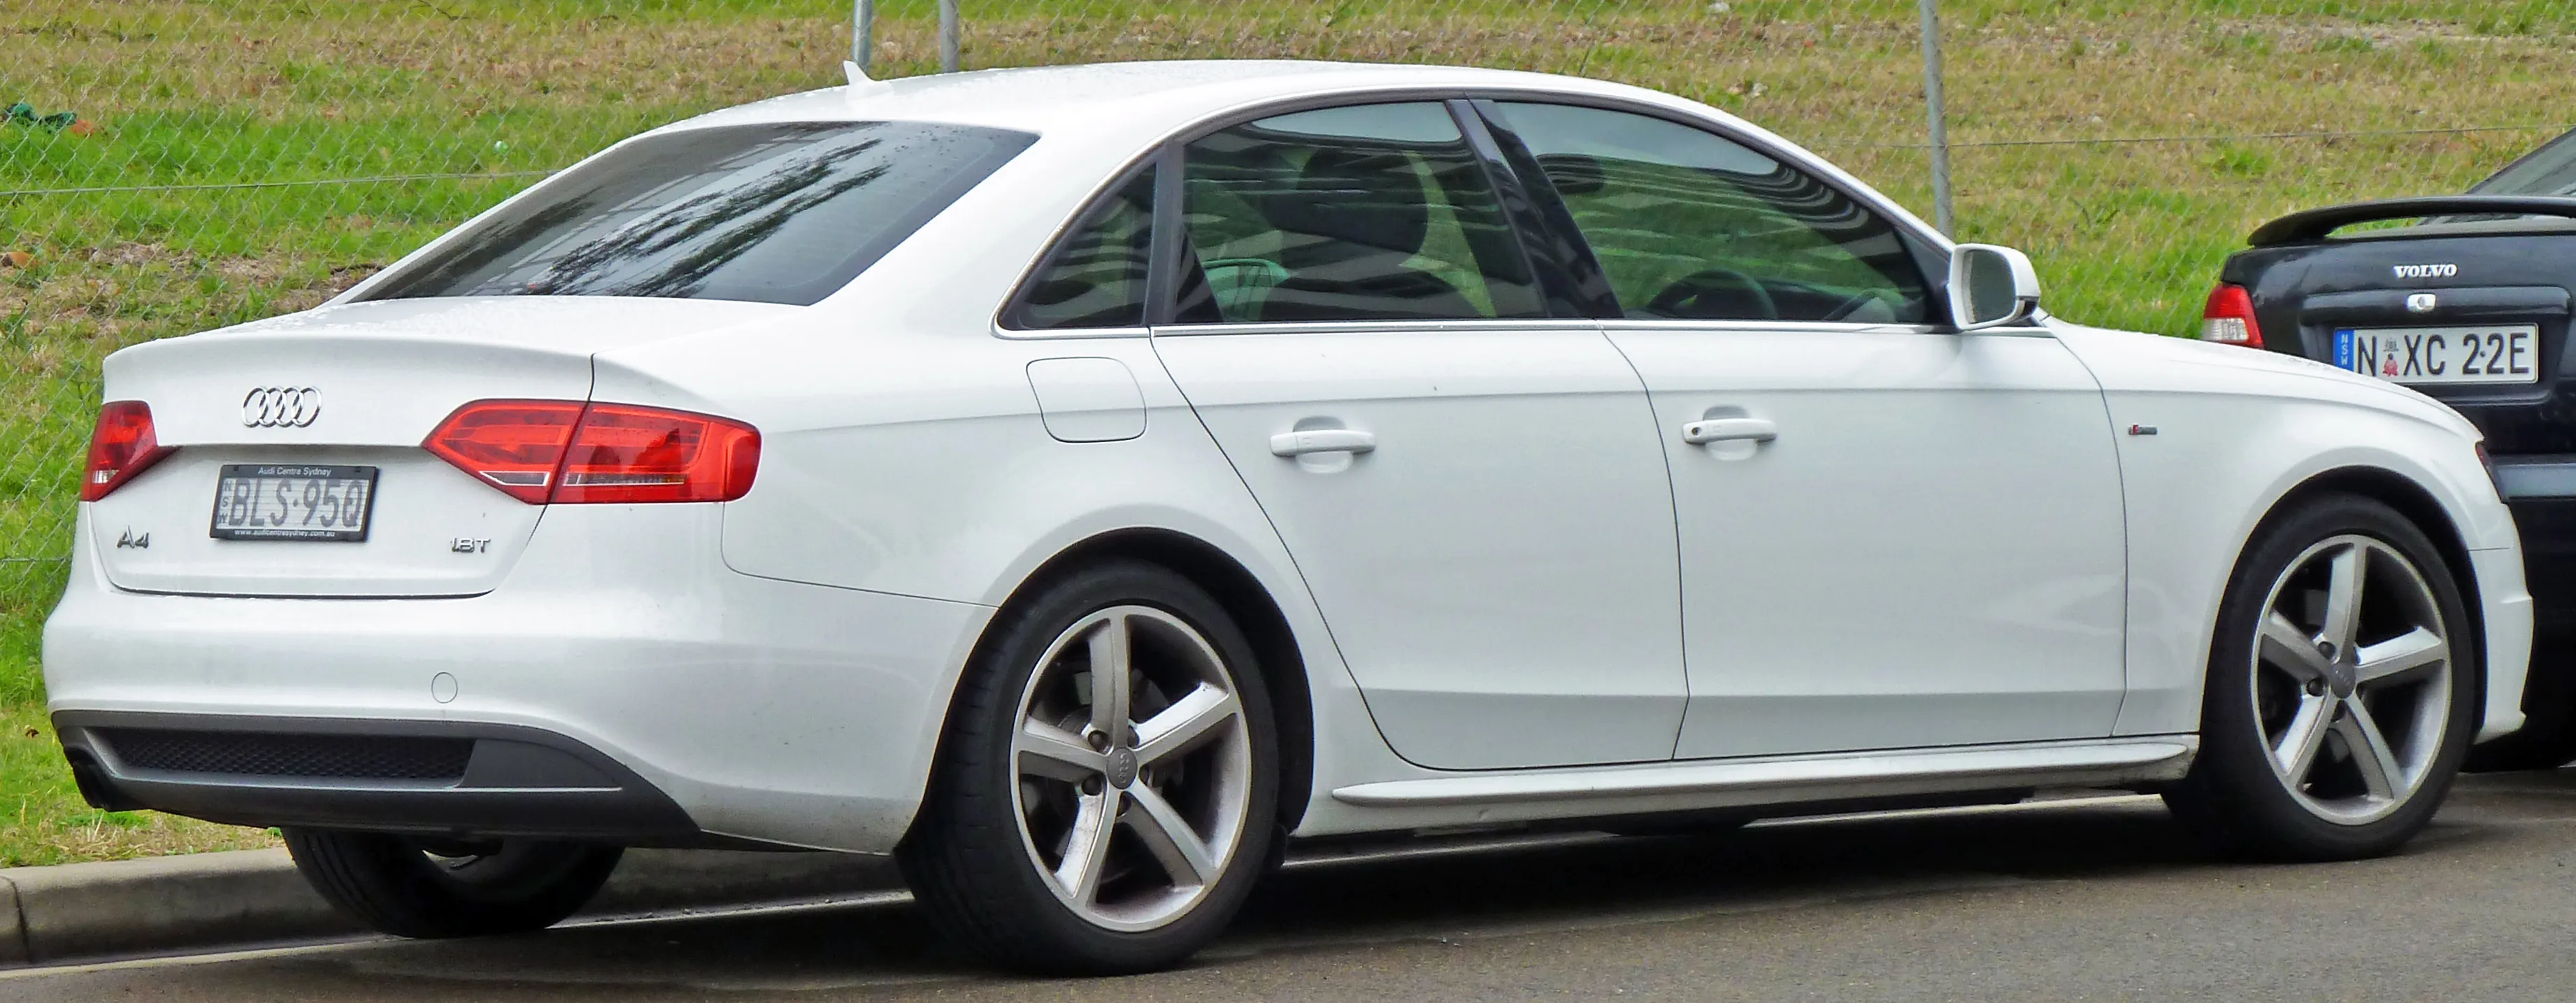 Audi A4 1.8 2010 photo - 1